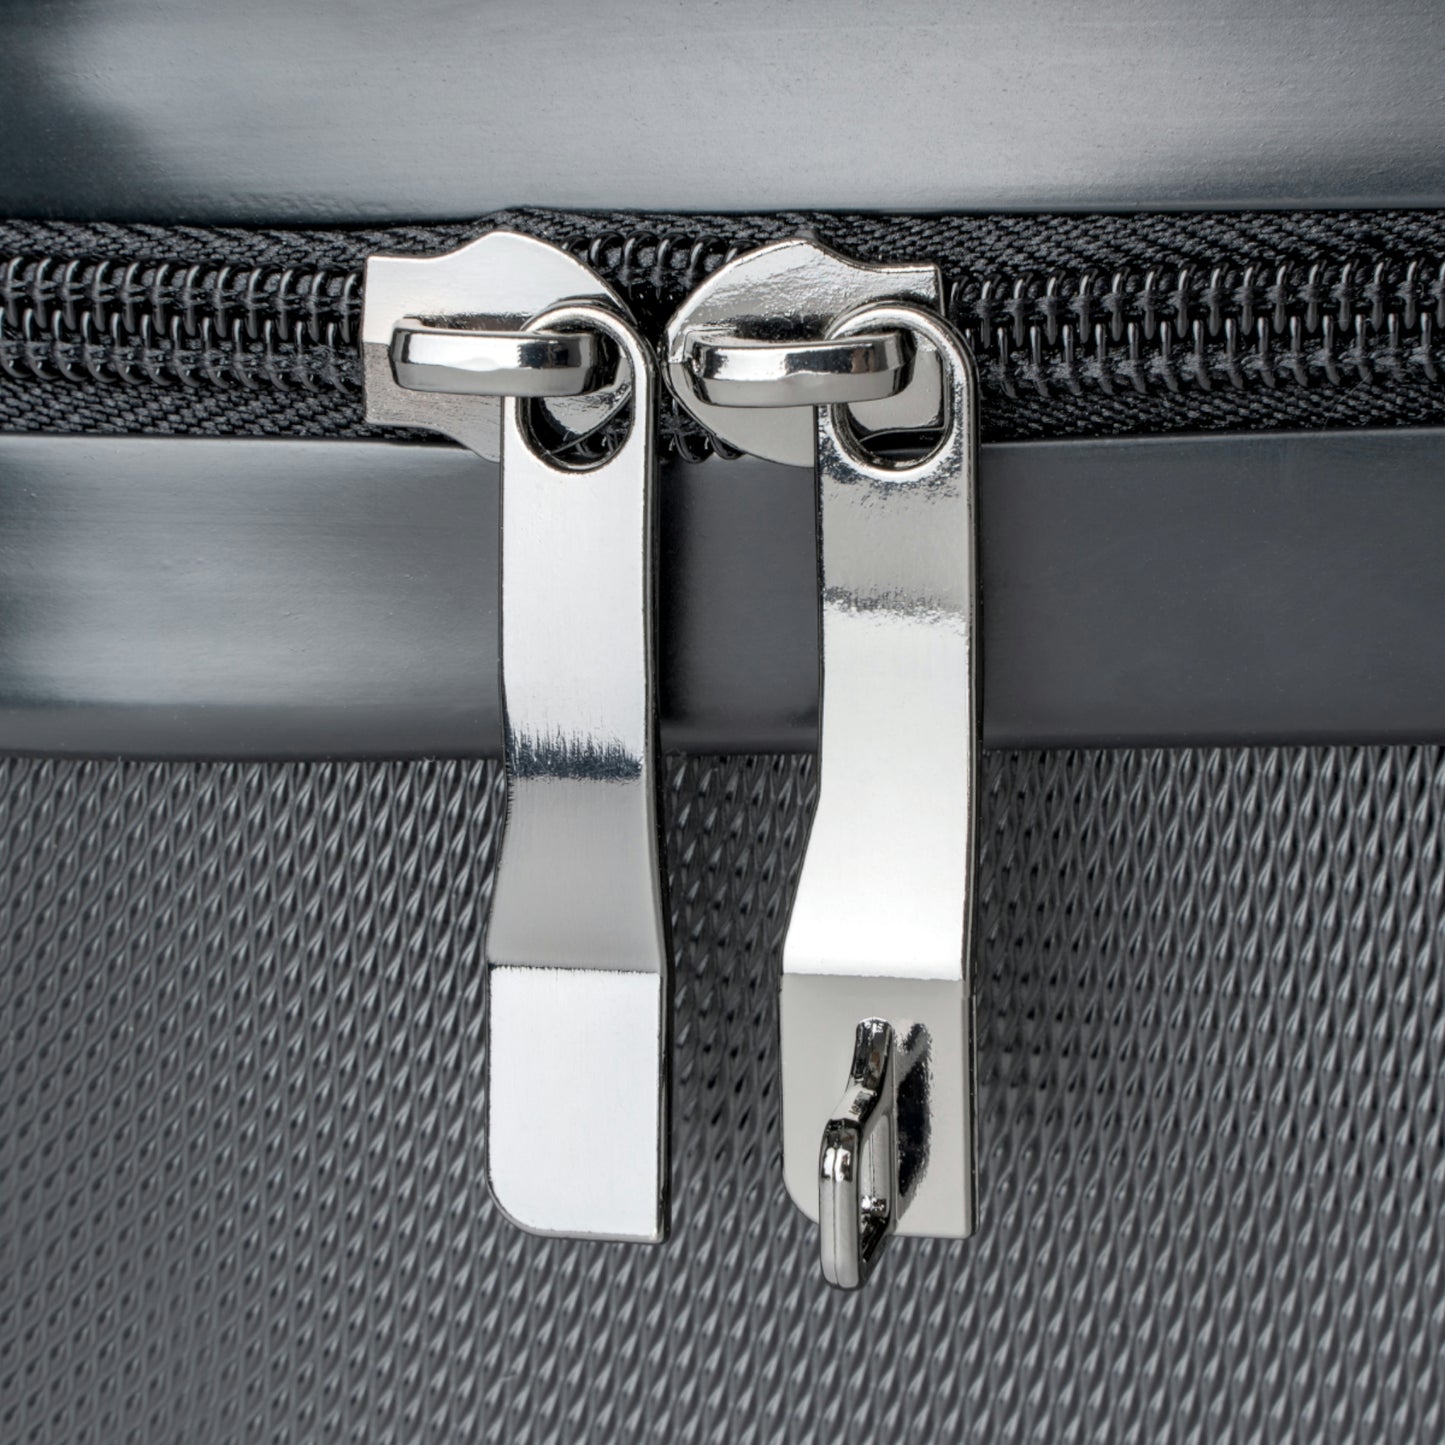 Purple Daisy Suitcase, Custom Luggage